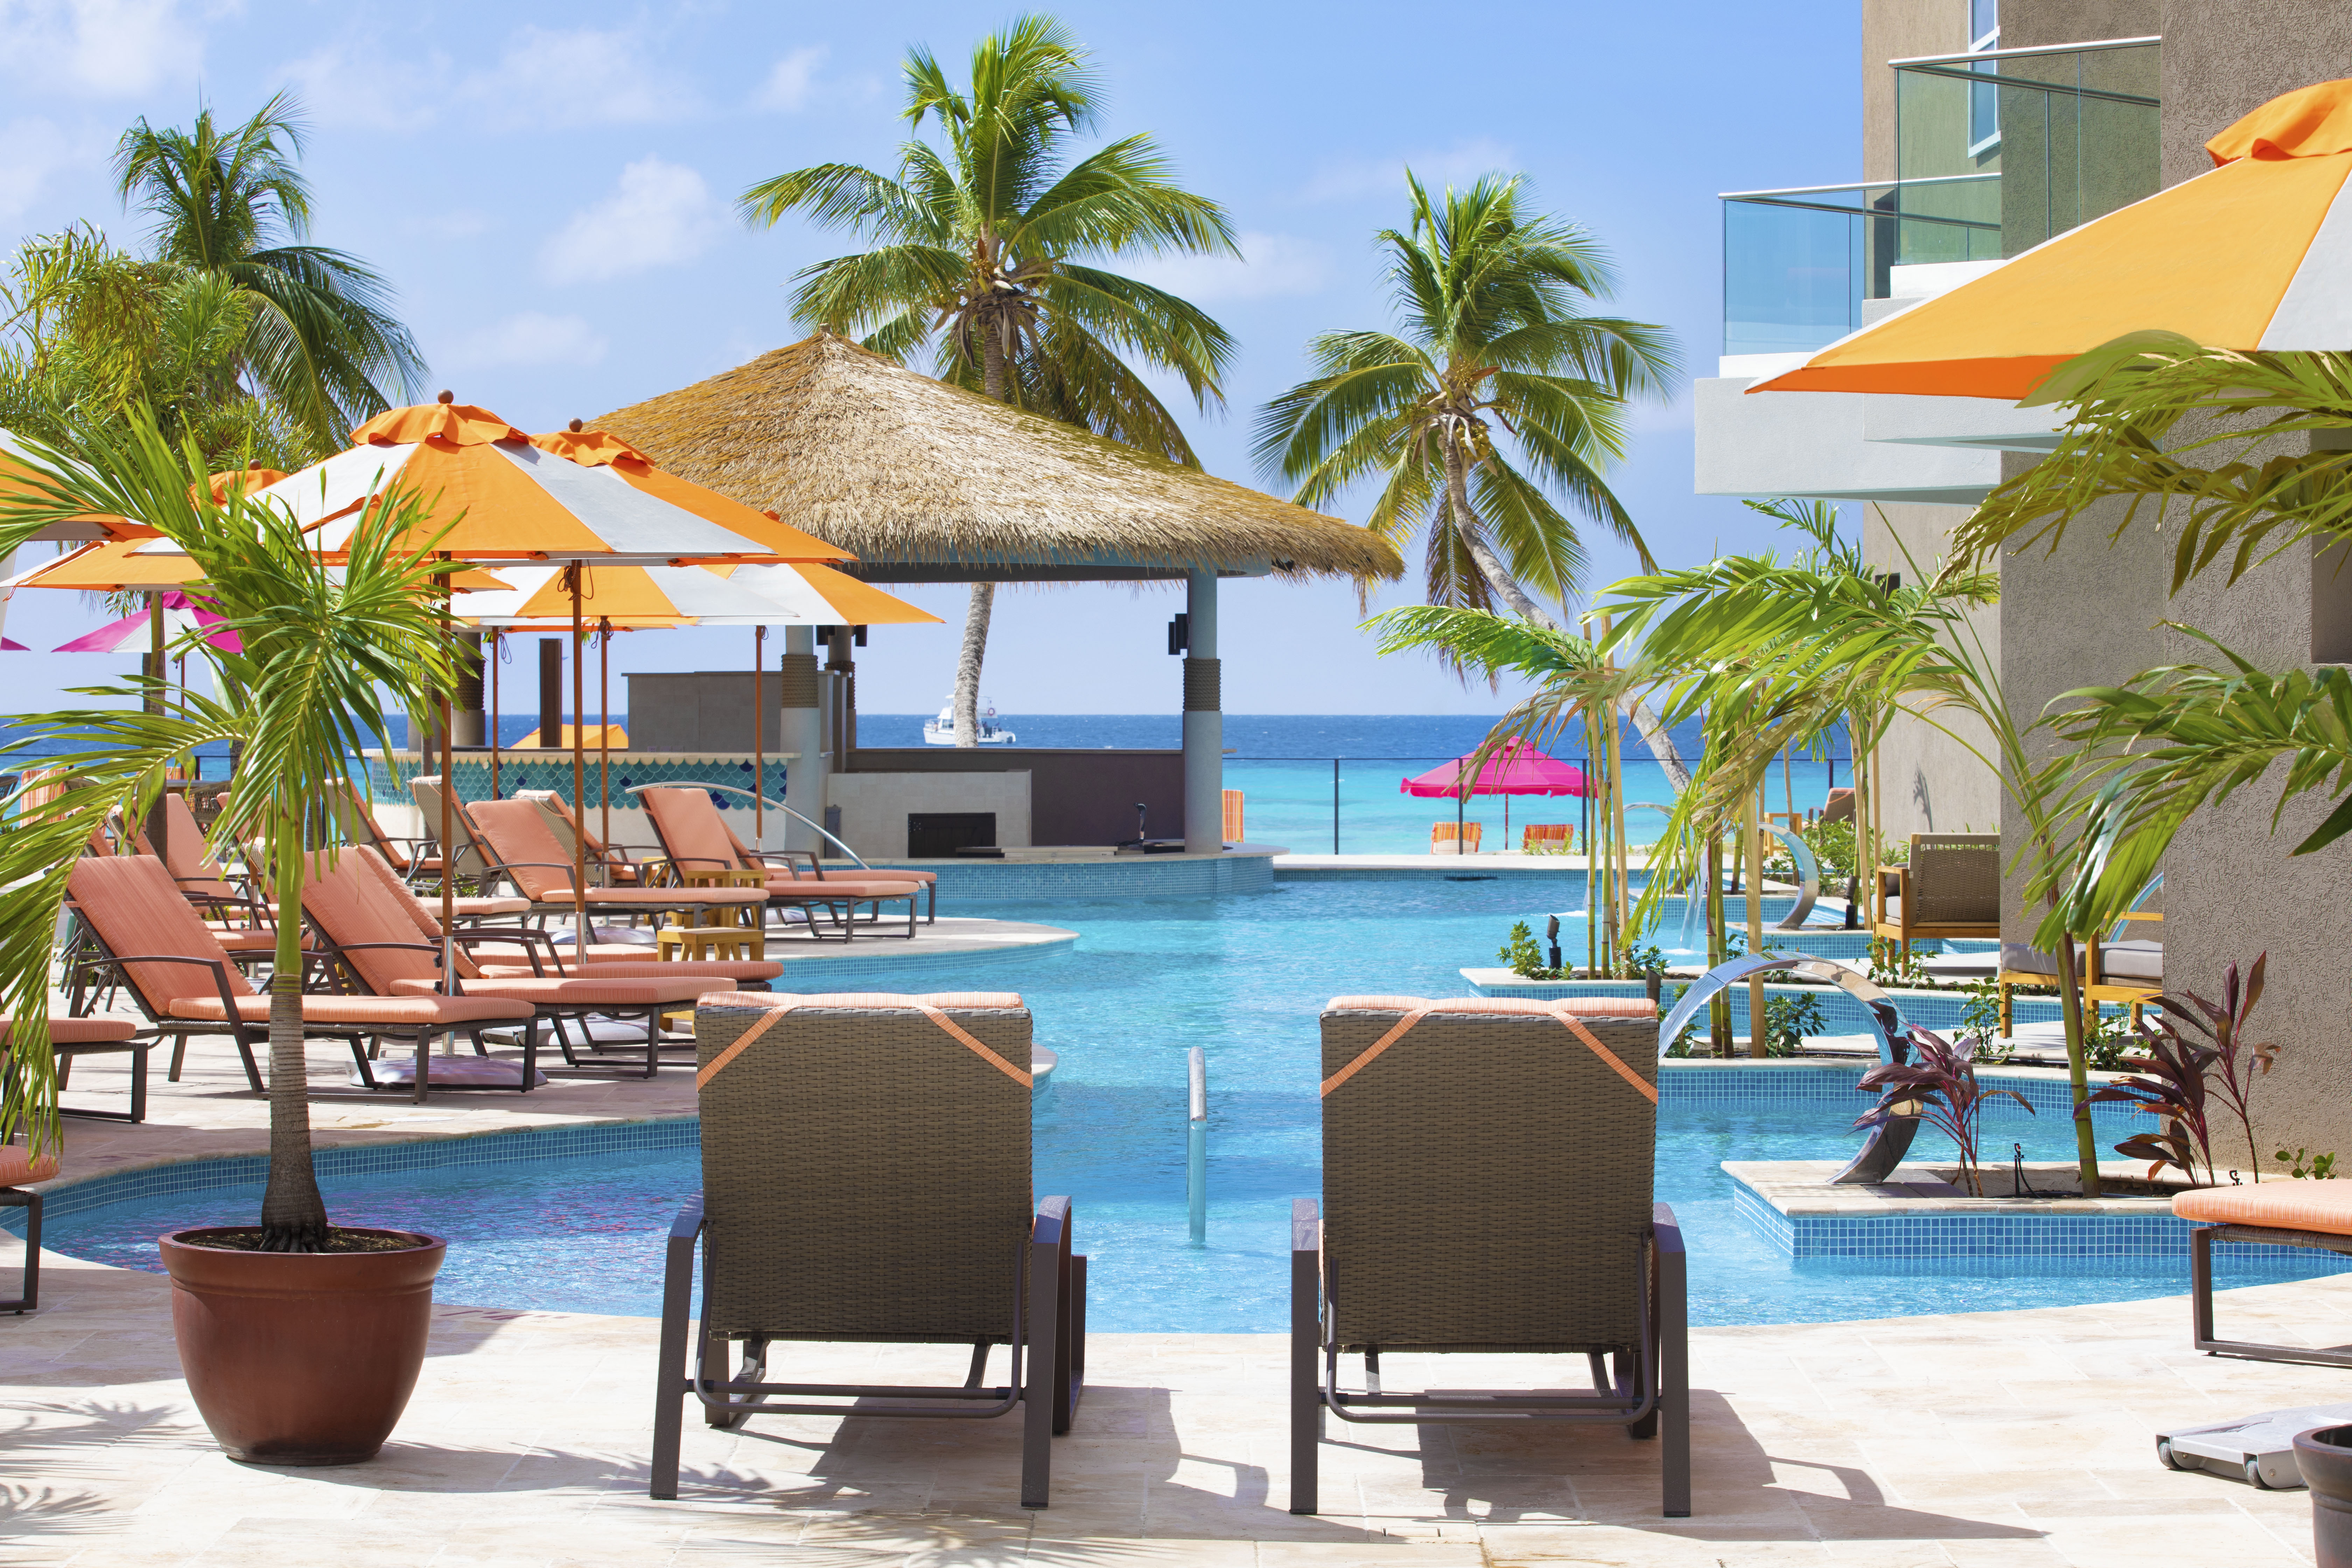 O2 Beach Club & Spa fra Ocean Hotels